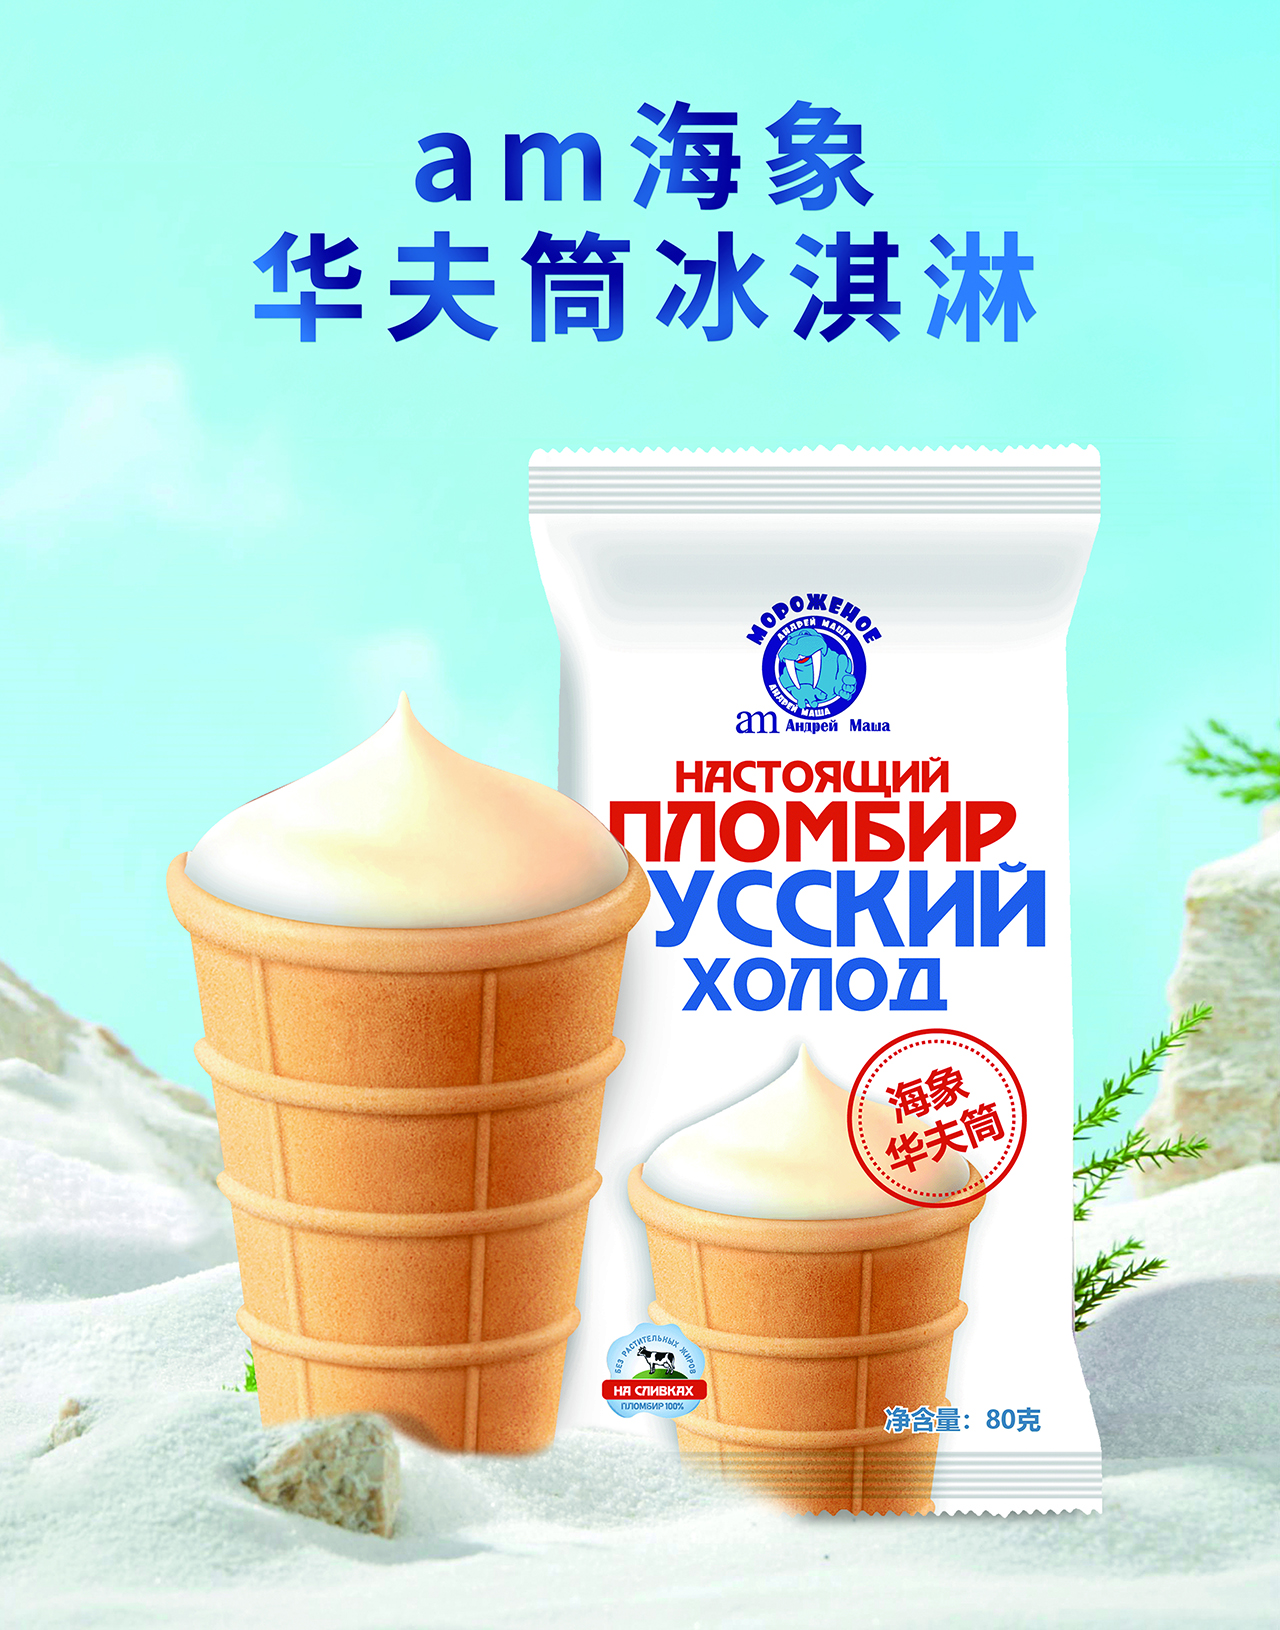 am海象皇宫冰淇淋赢得消费者青睐，打造多款爆红人气新品